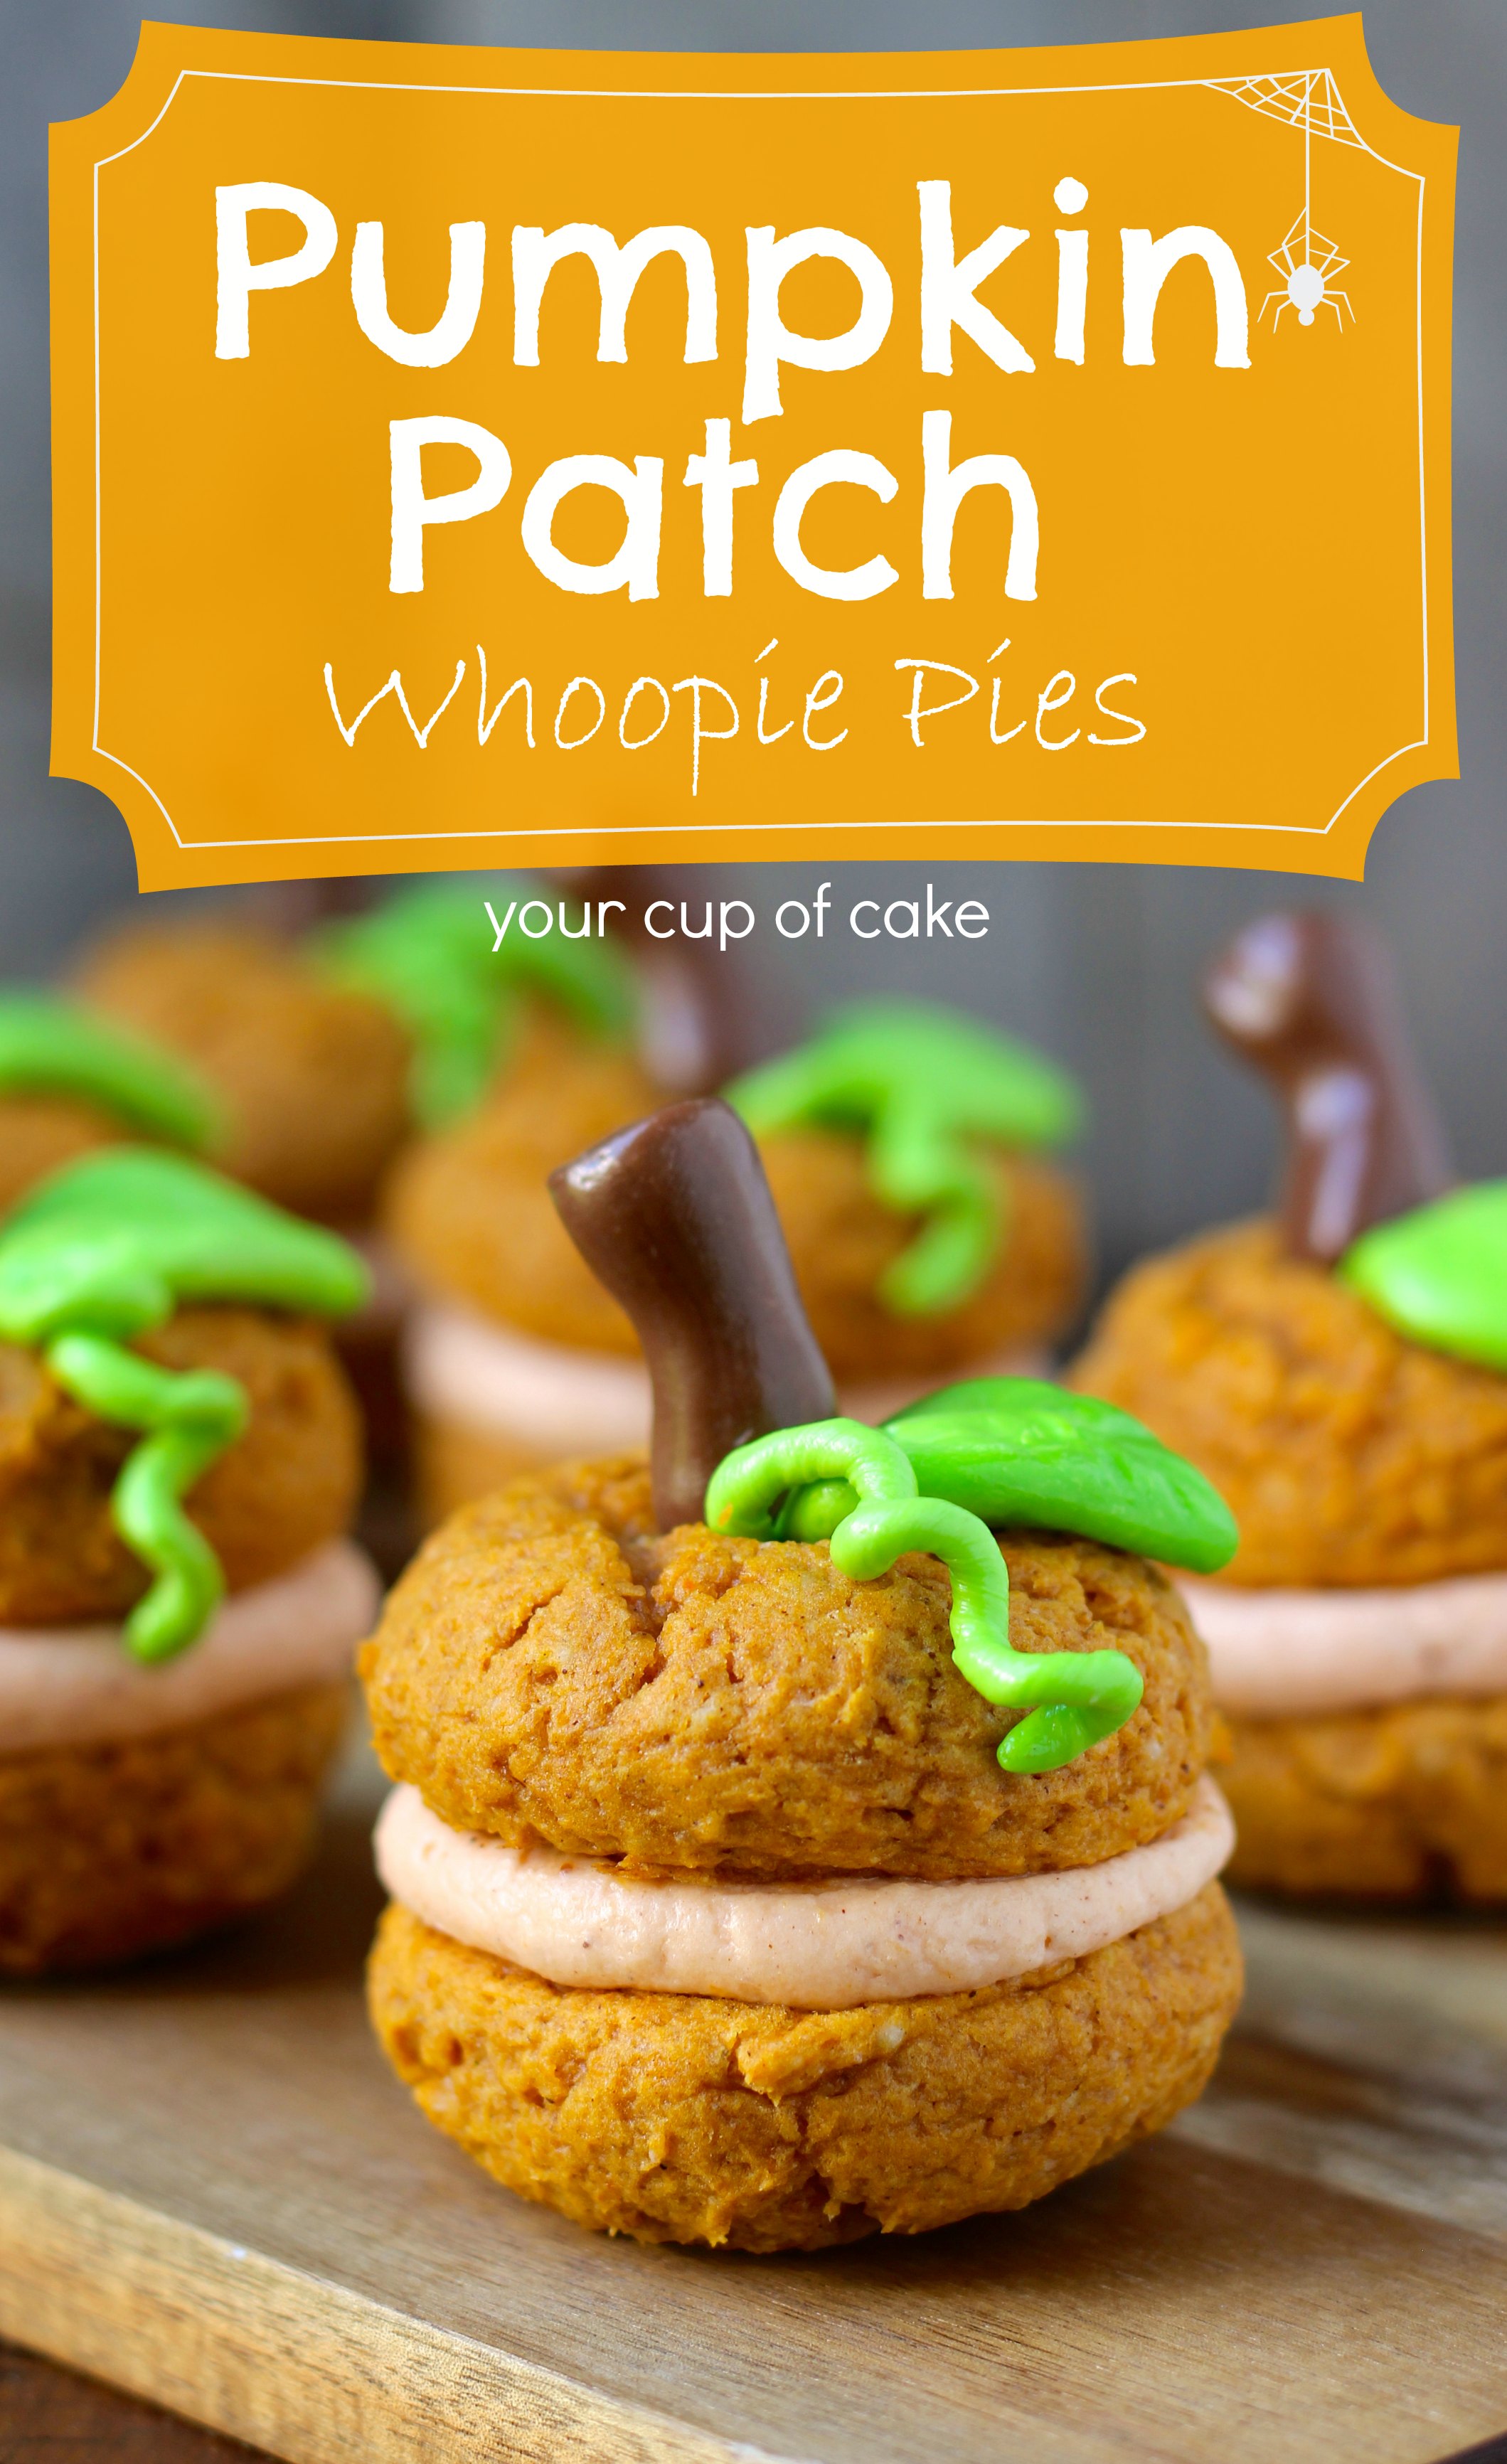 https://www.yourcupofcake.com/wp-content/uploads/2013/09/Pumpkin-Patch-Whoopie-Pies.jpg